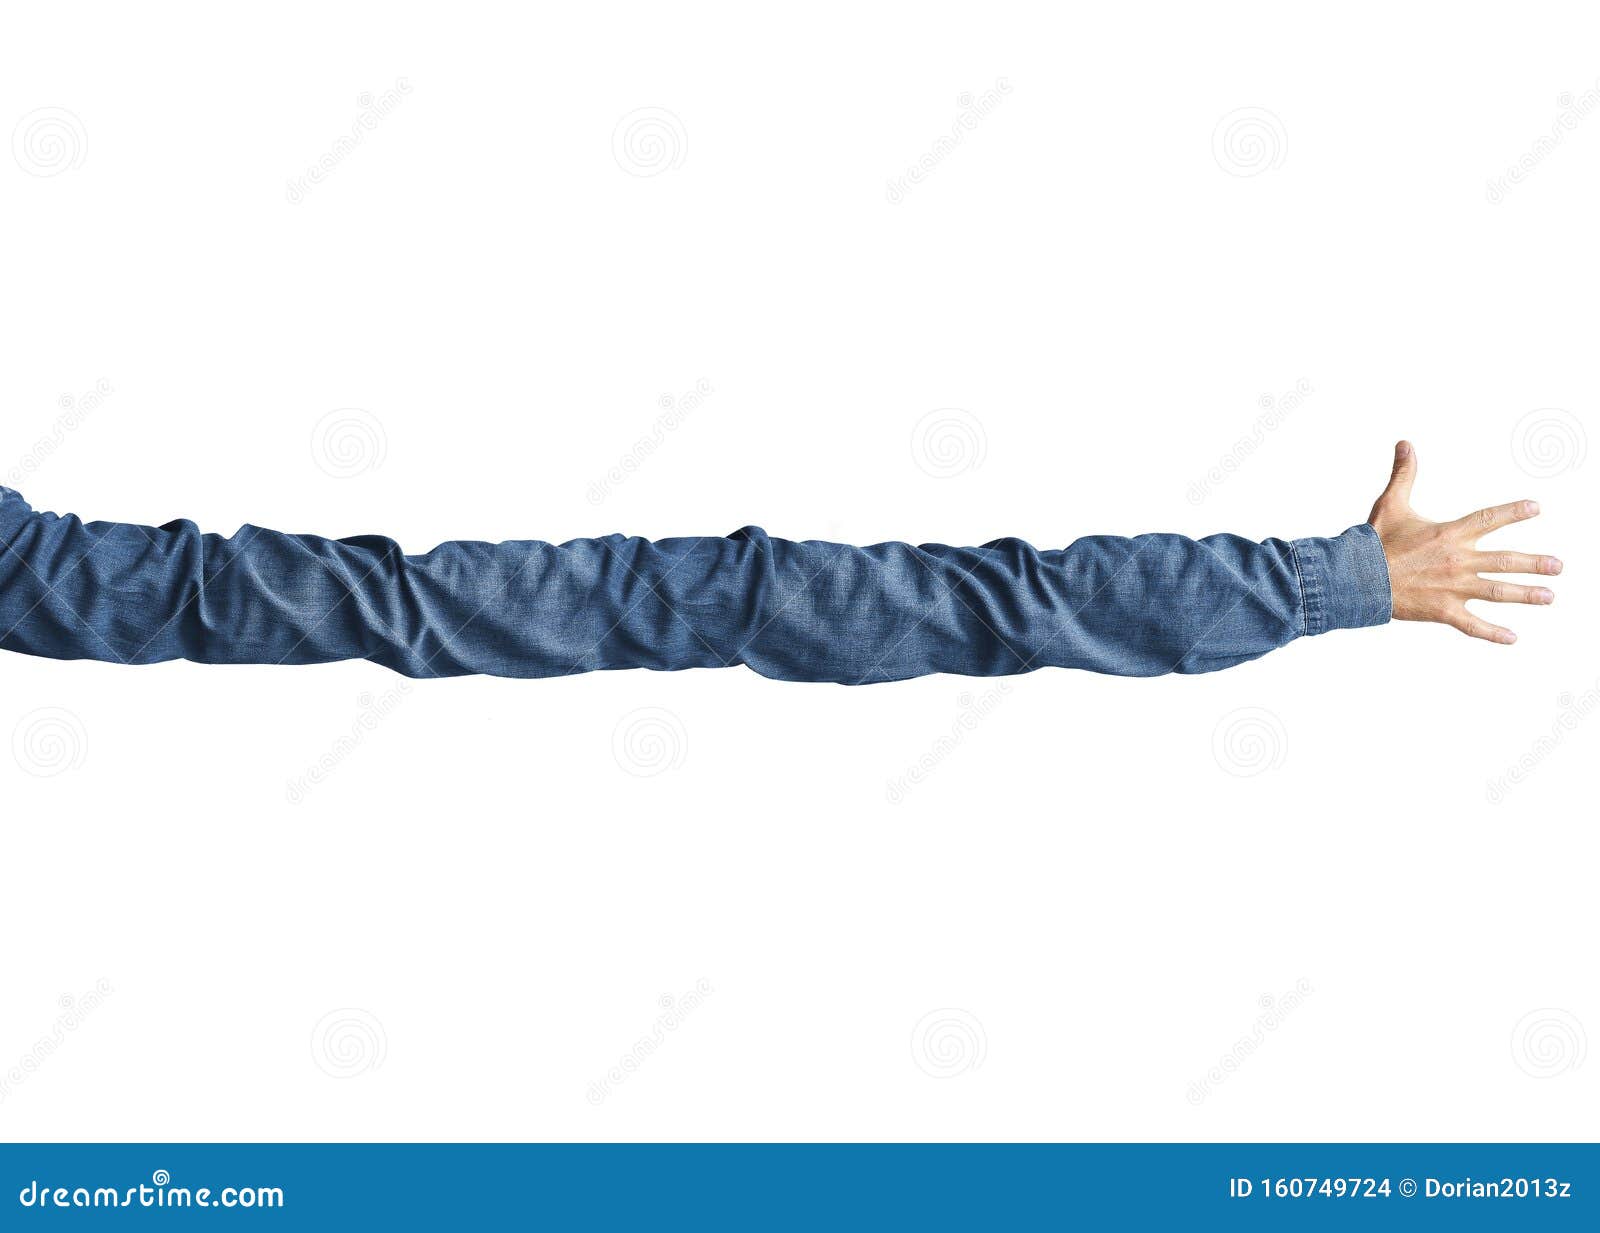 very long arm